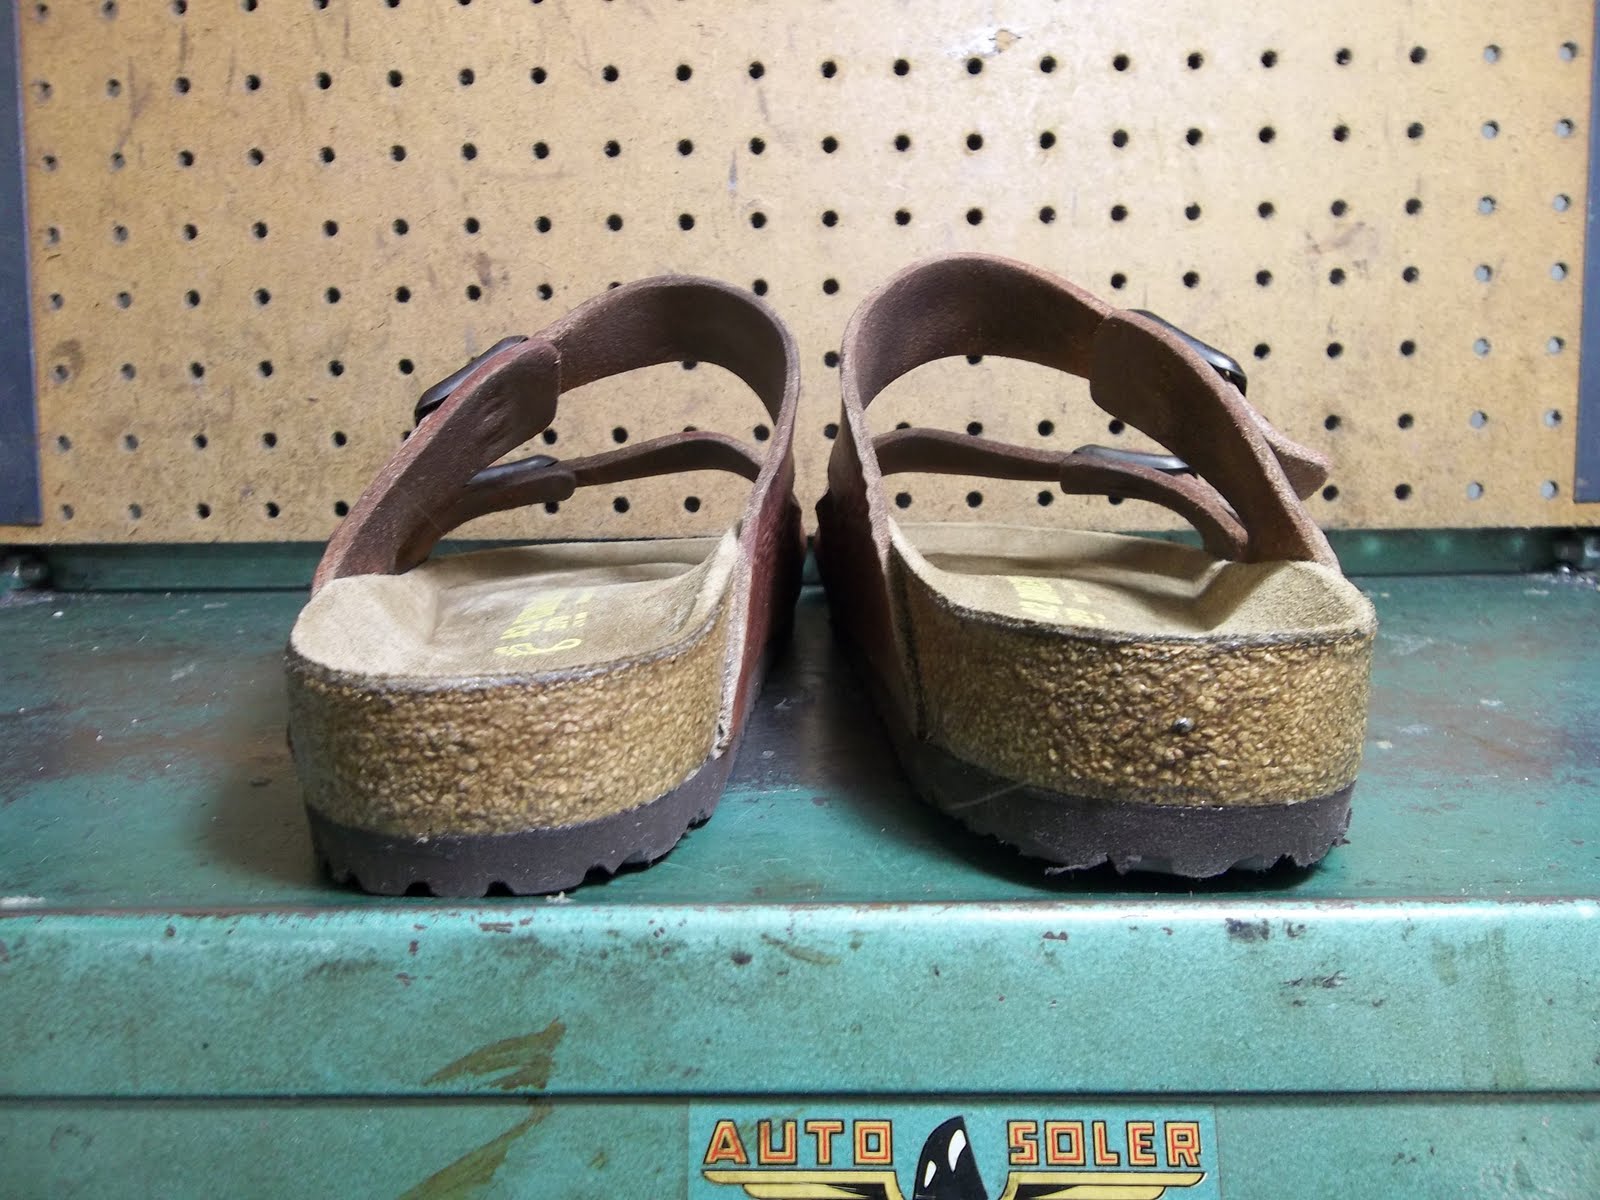 Edgewood Drive Shoe Repair: Birkenstock Rebuild Before and After